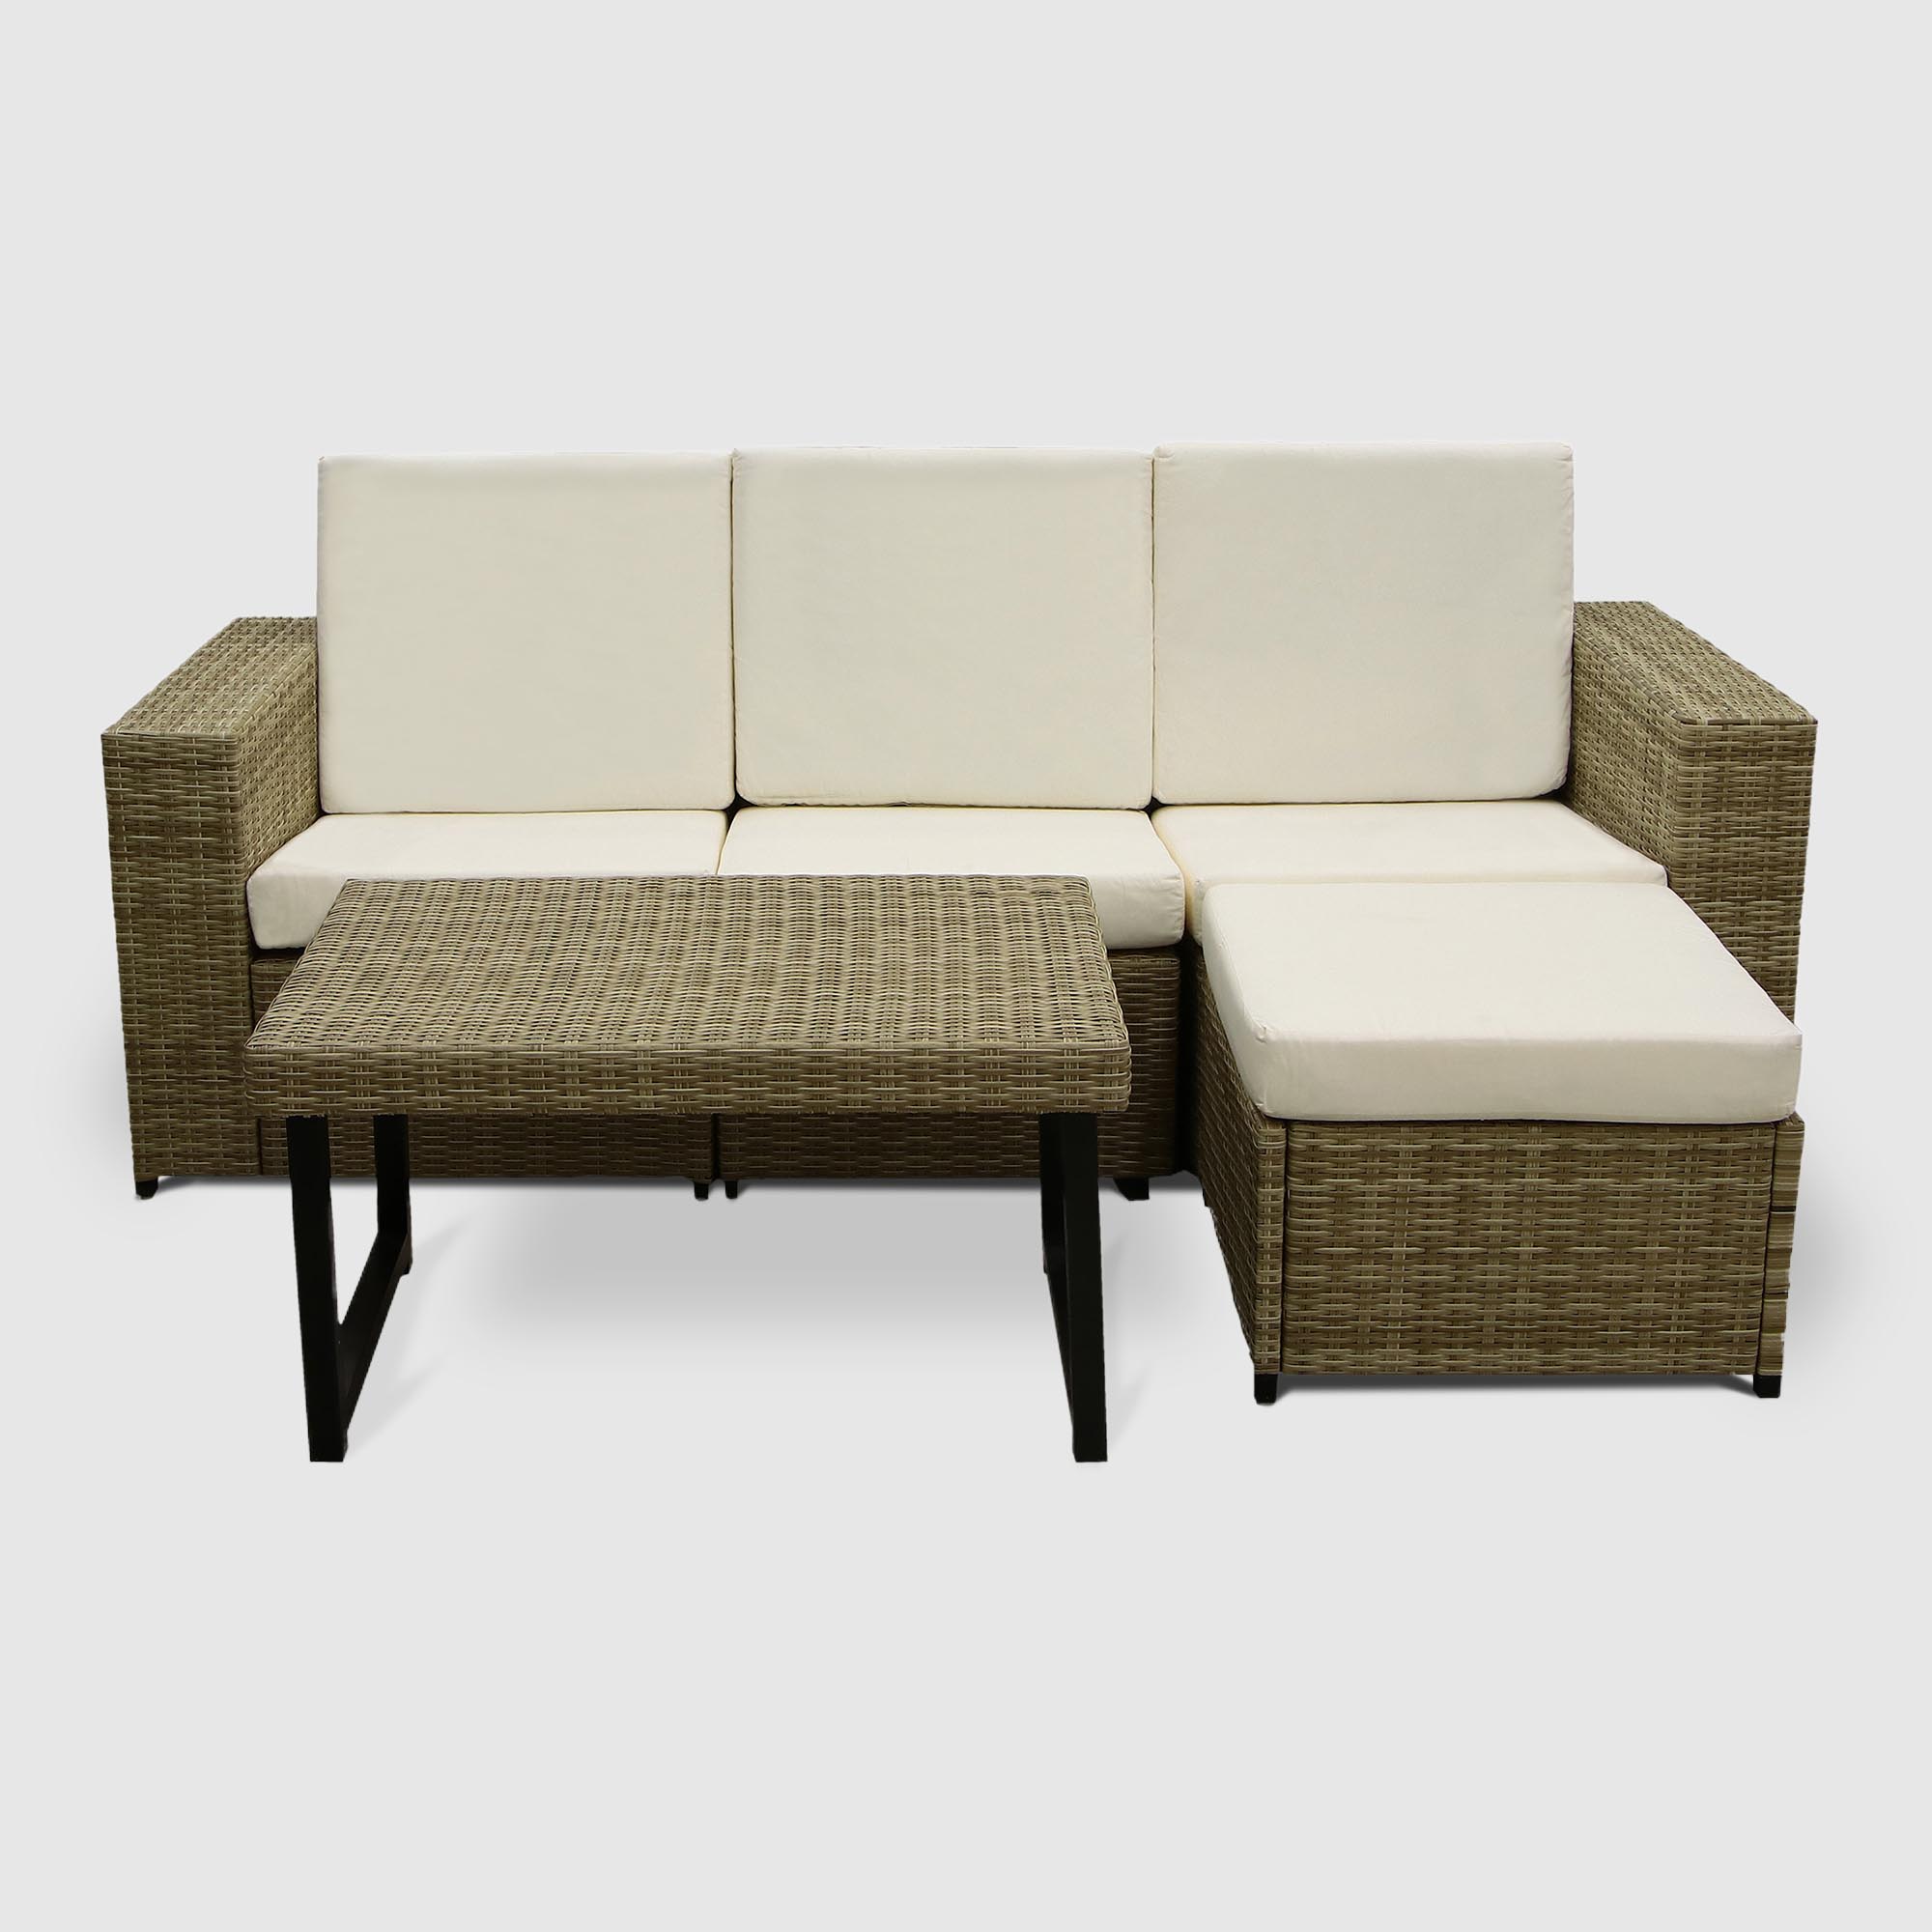 Комплект мебели Rattan grand 2 предмета, цвет коричневый, размер 220х85х82 - фото 1